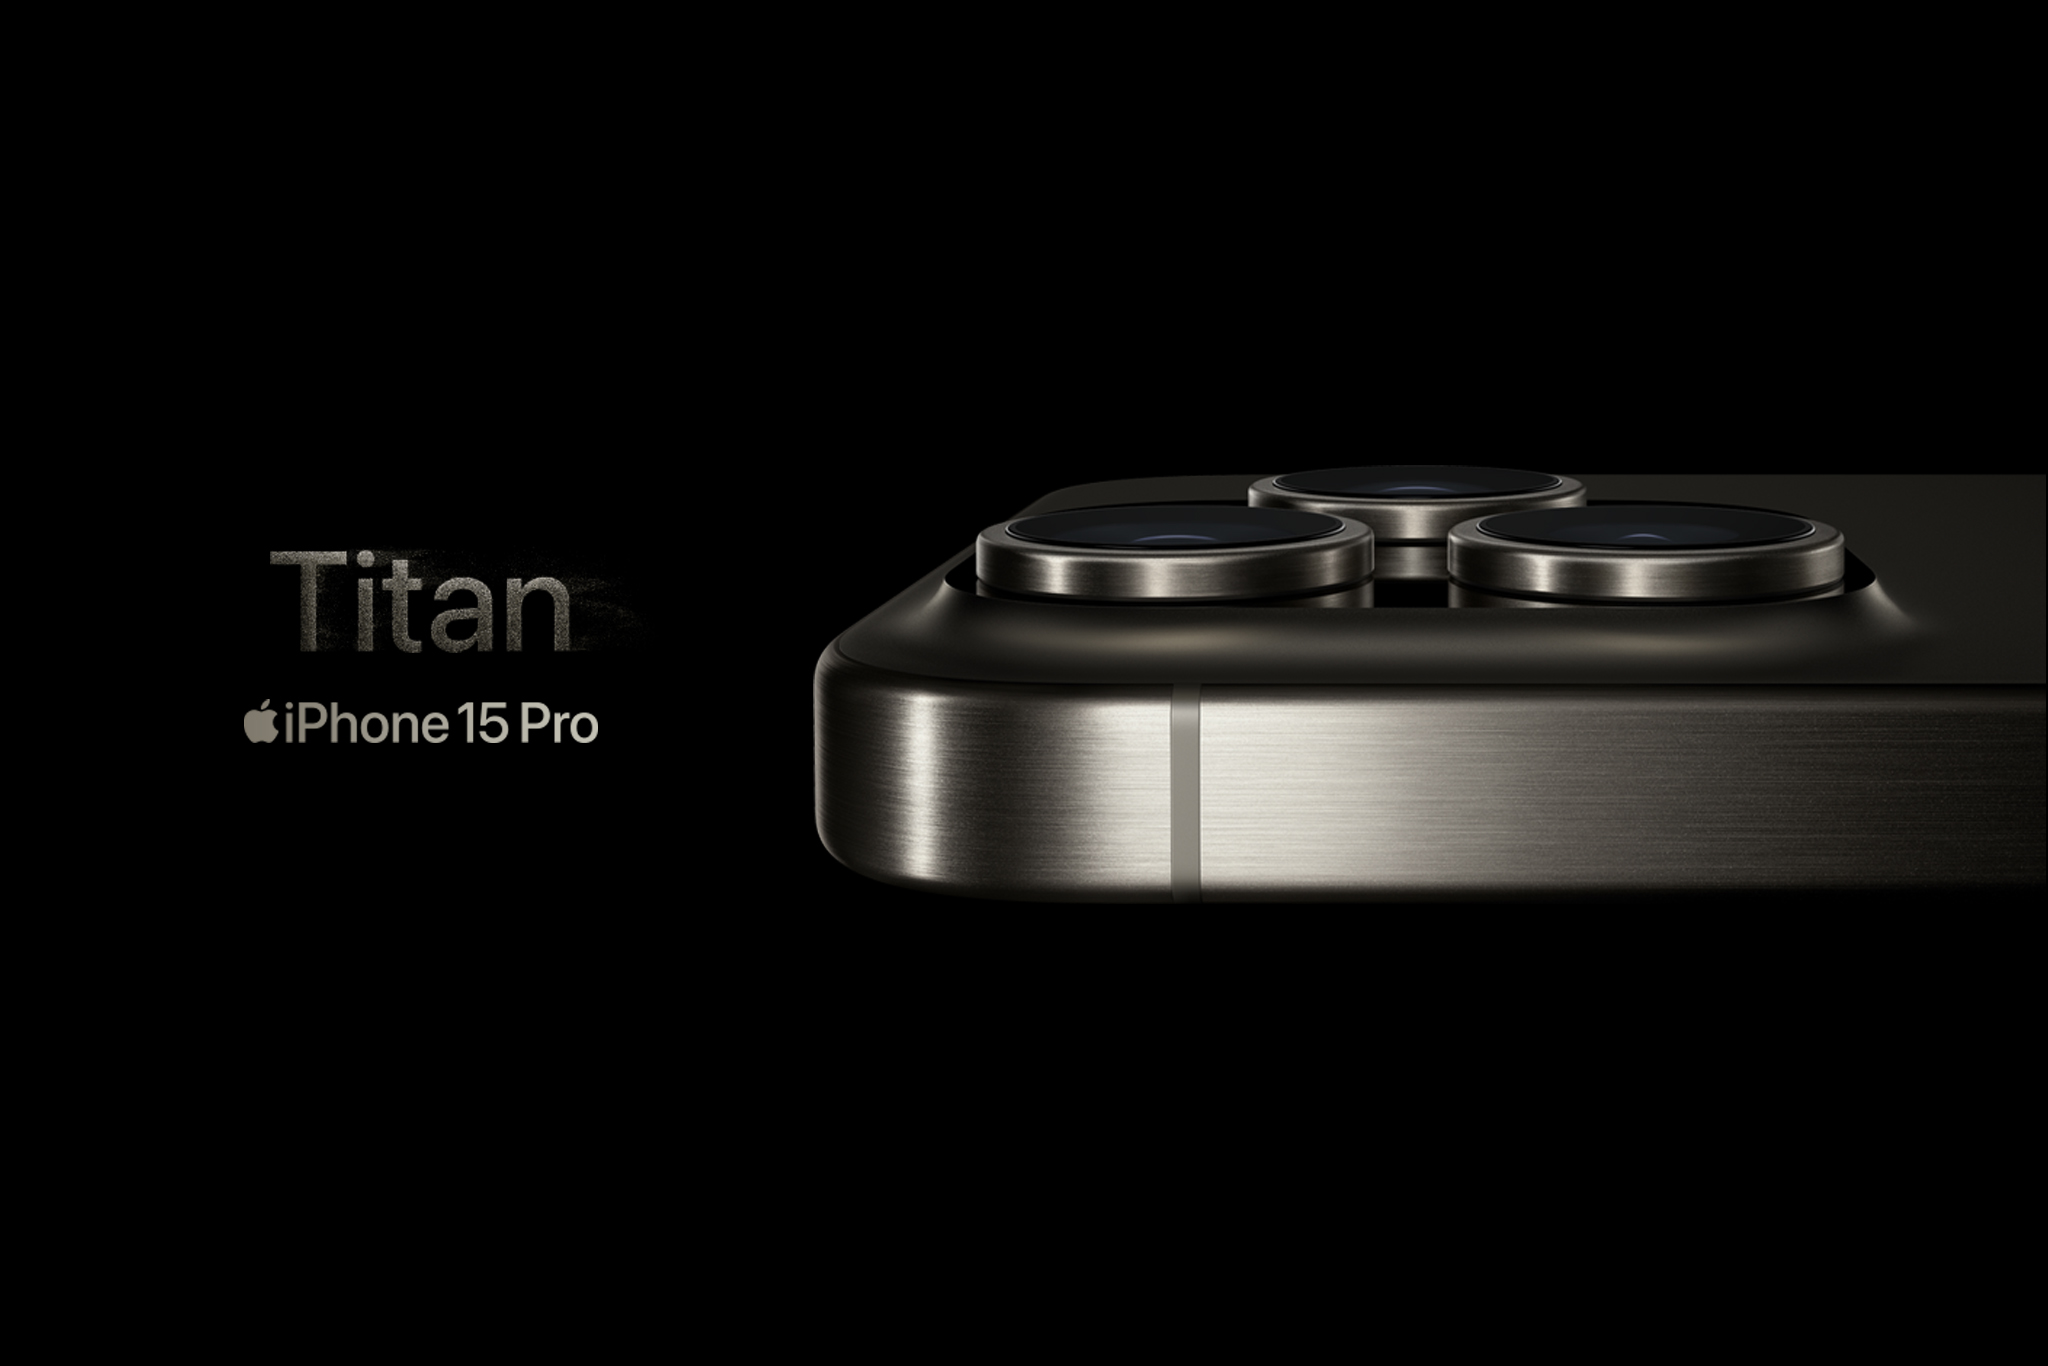 iPhone 15 Pro titan